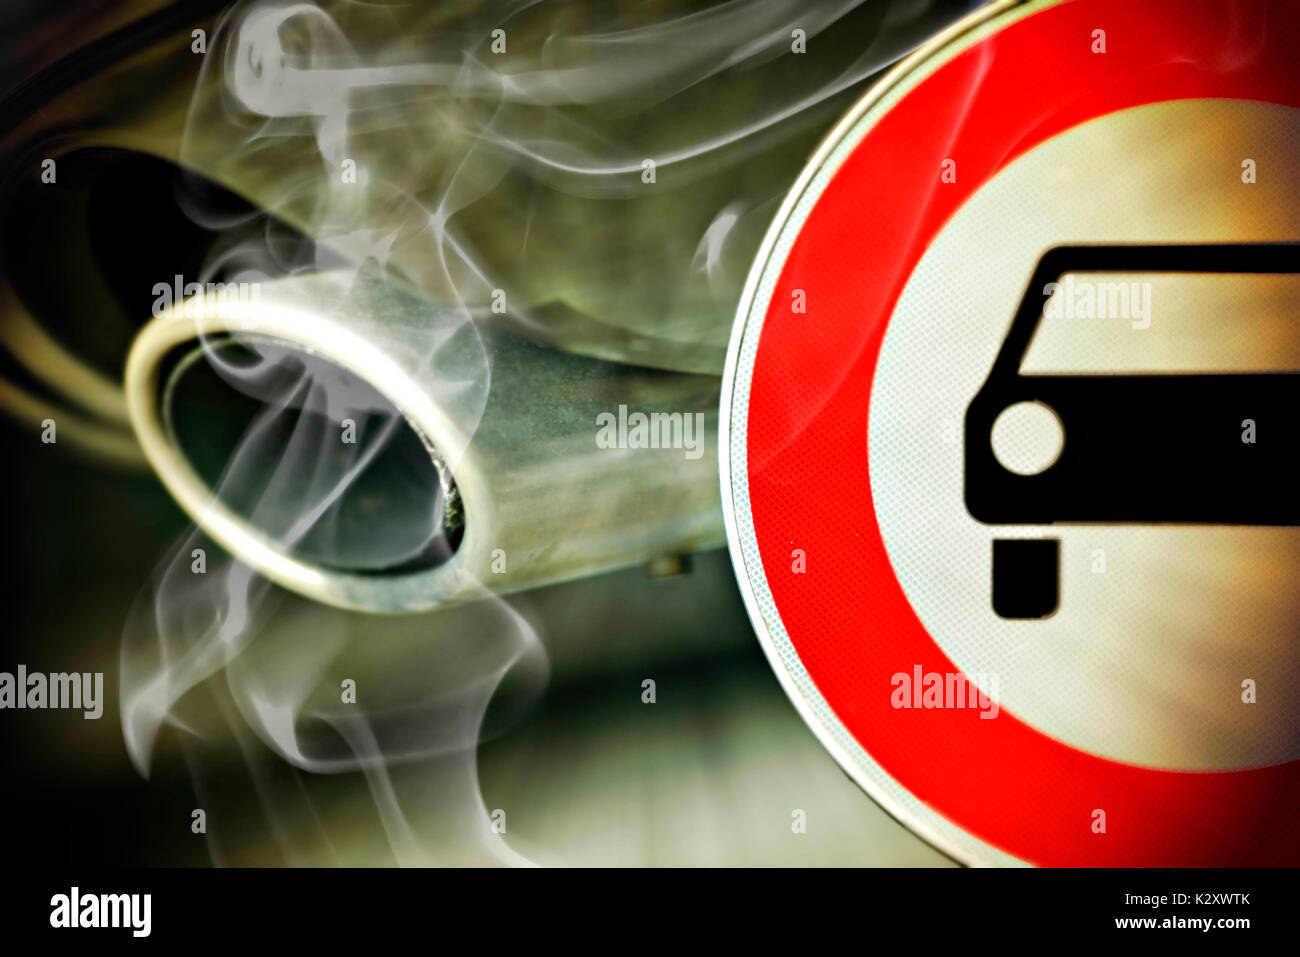 No parking sign and autoexhaust with exhaust gases, diesel ban on driving, Verbotsschild und Autoauspuff mit Abgasen, Diesel-Fahrverbot Stock Photo